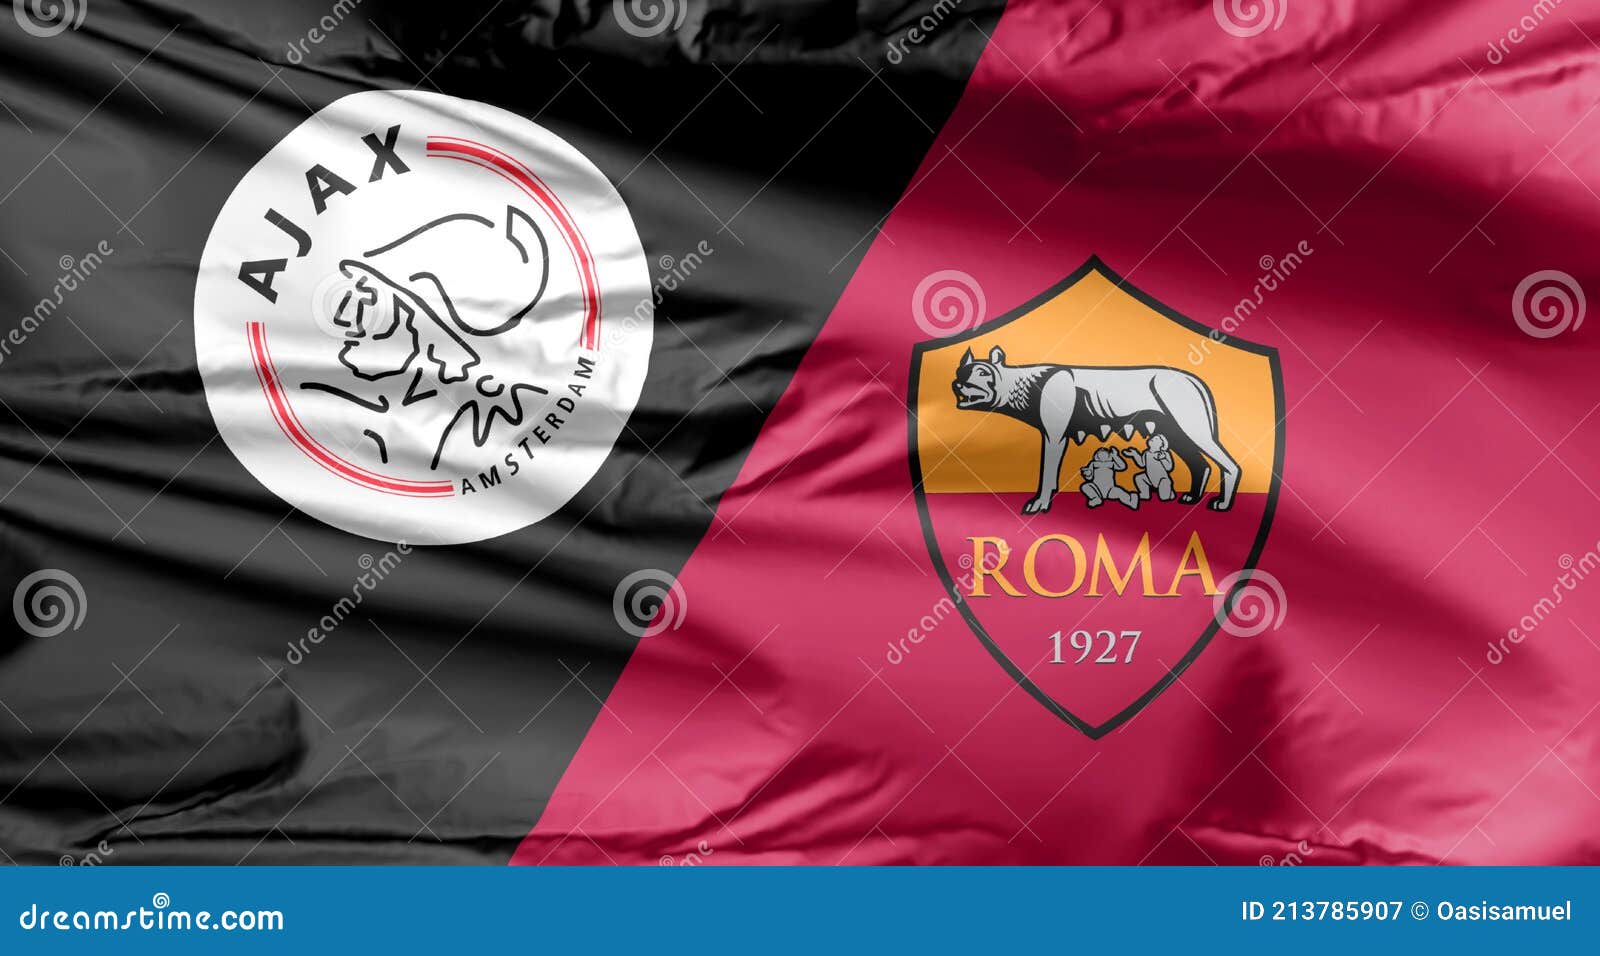 Ajax vs roma